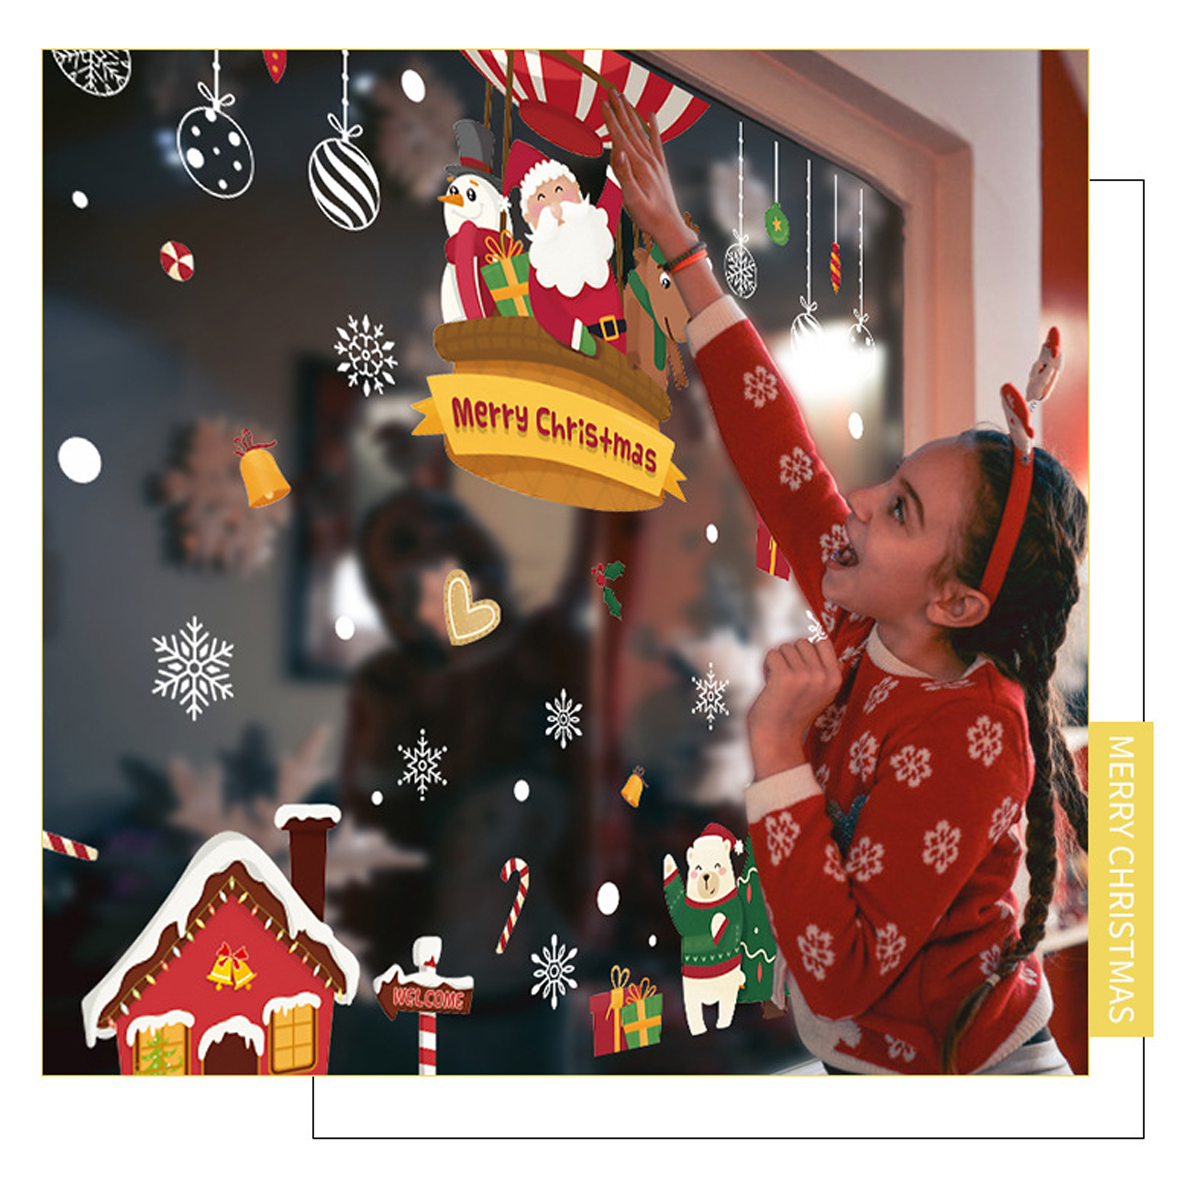 2020-Christmas-Decoration-Sticker-Glass-windows-Decals-Merry-Christmas-Home-Decoration-Wall-Stickers-1764899-6